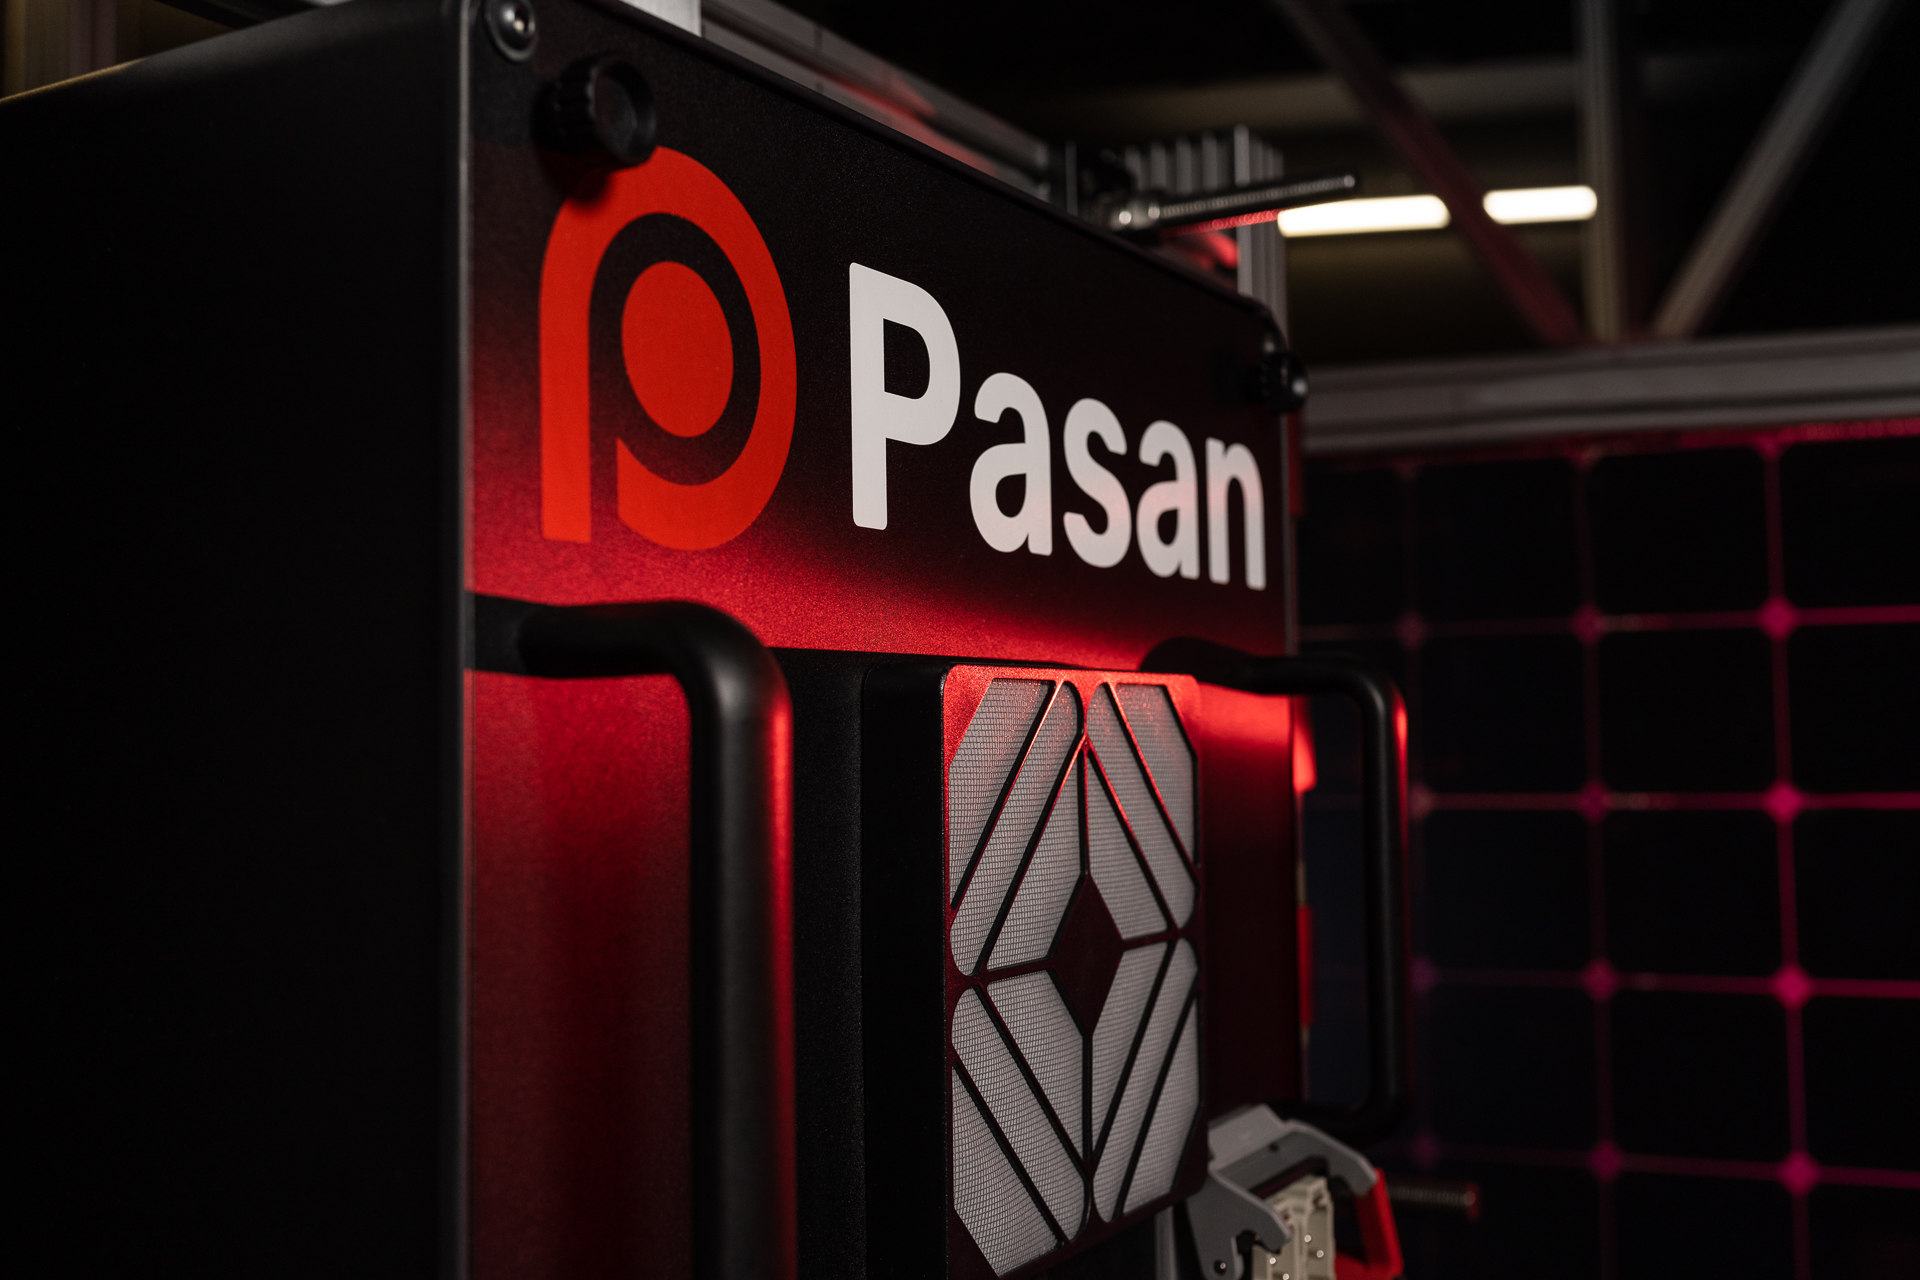 Pasan Sun simulator for space solar panels